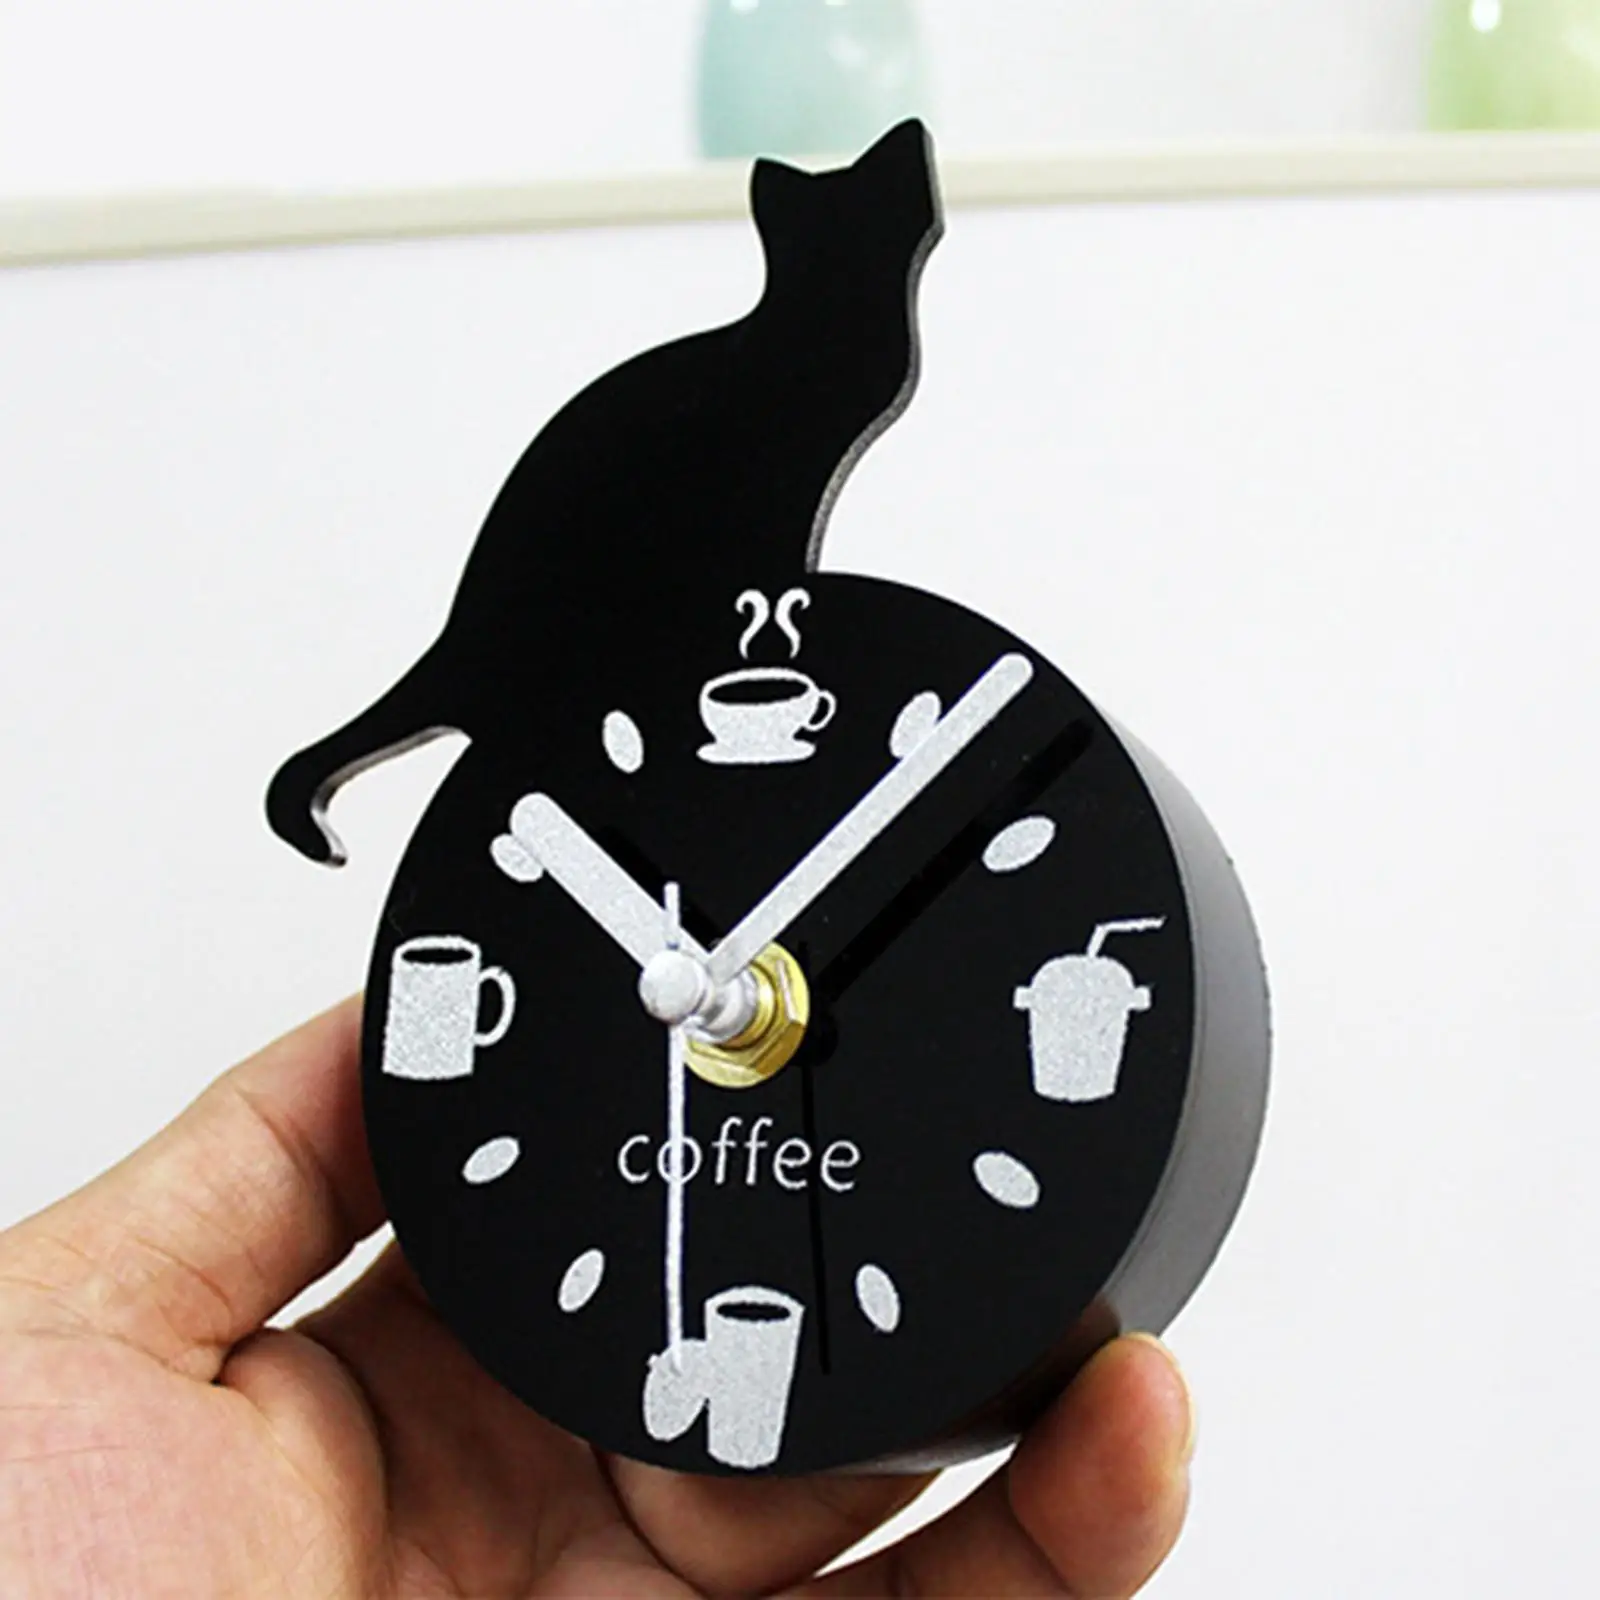 Cute Refrigerator Magnet Clock Portable Climbing Cat Decorative Fridge Stickers Hanging Magnet Wall Clock for Living Room Decor